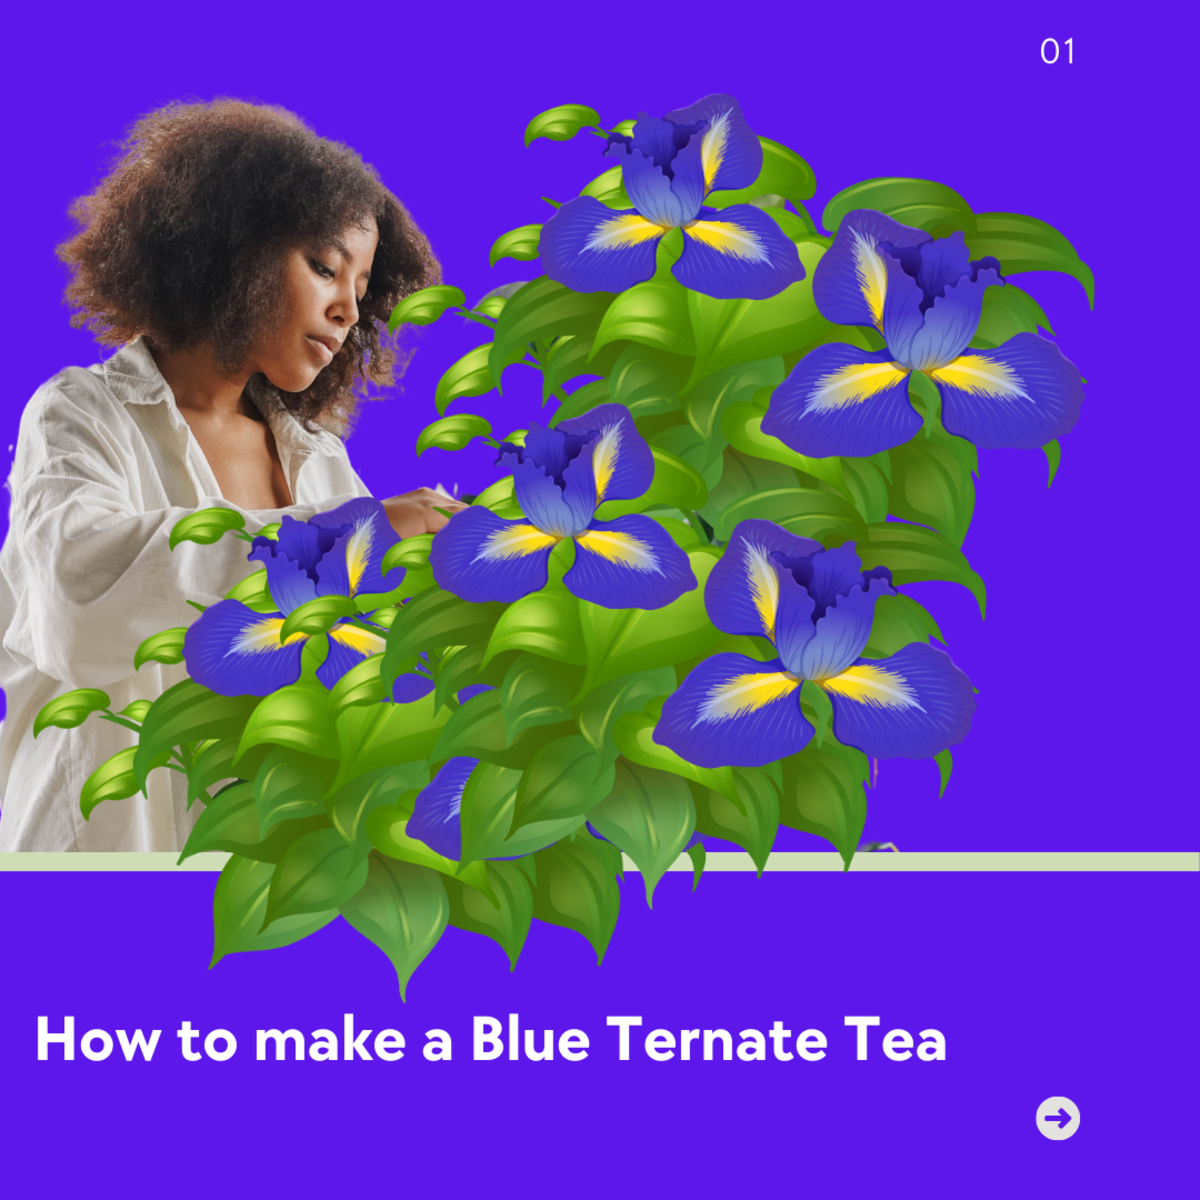 How to make a Blue Ternate Tea